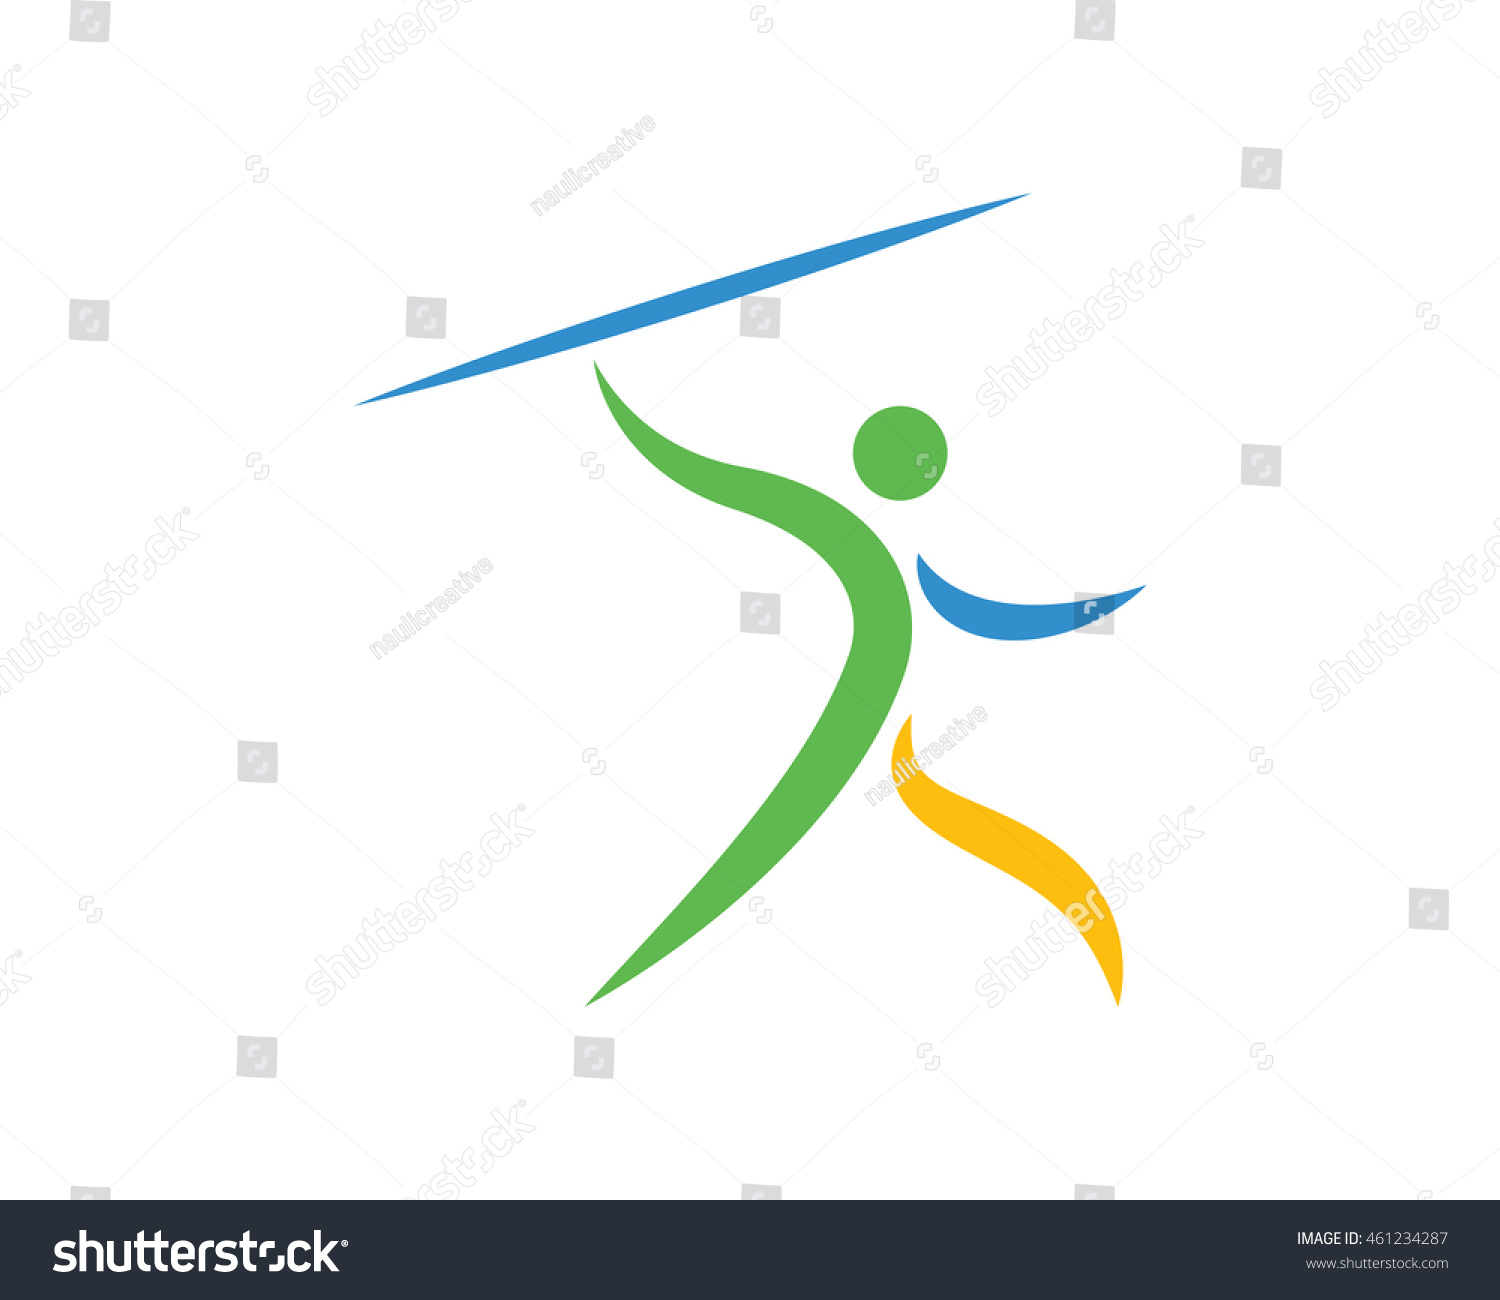 Summer sports icons set - javelin throw icon vector illustration 